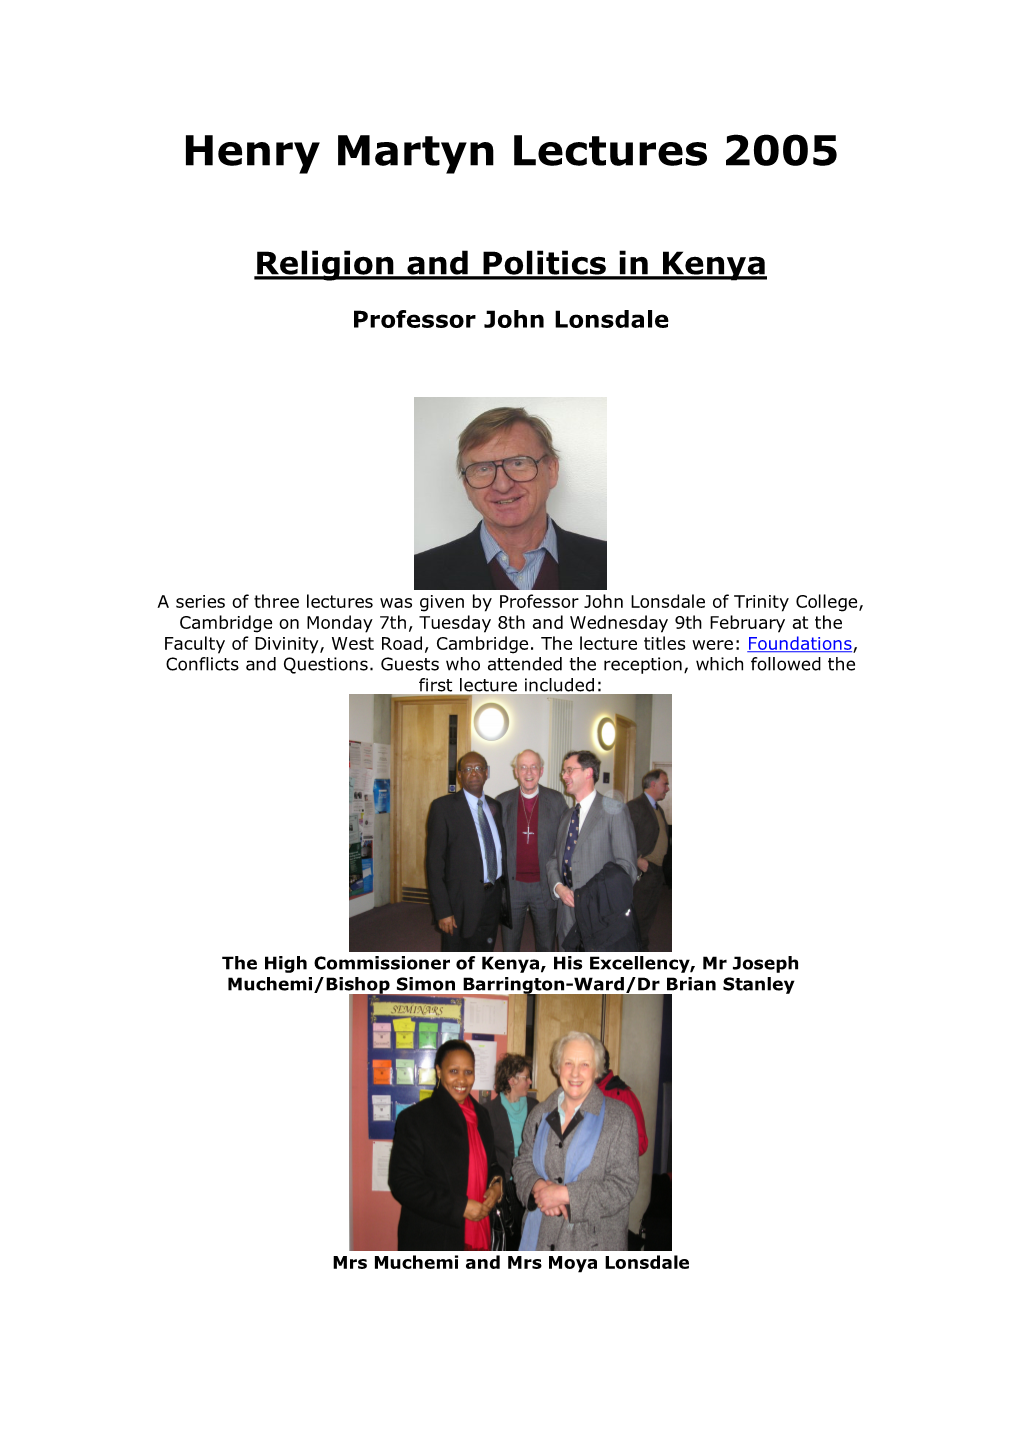 Religion and Politics in Kenya